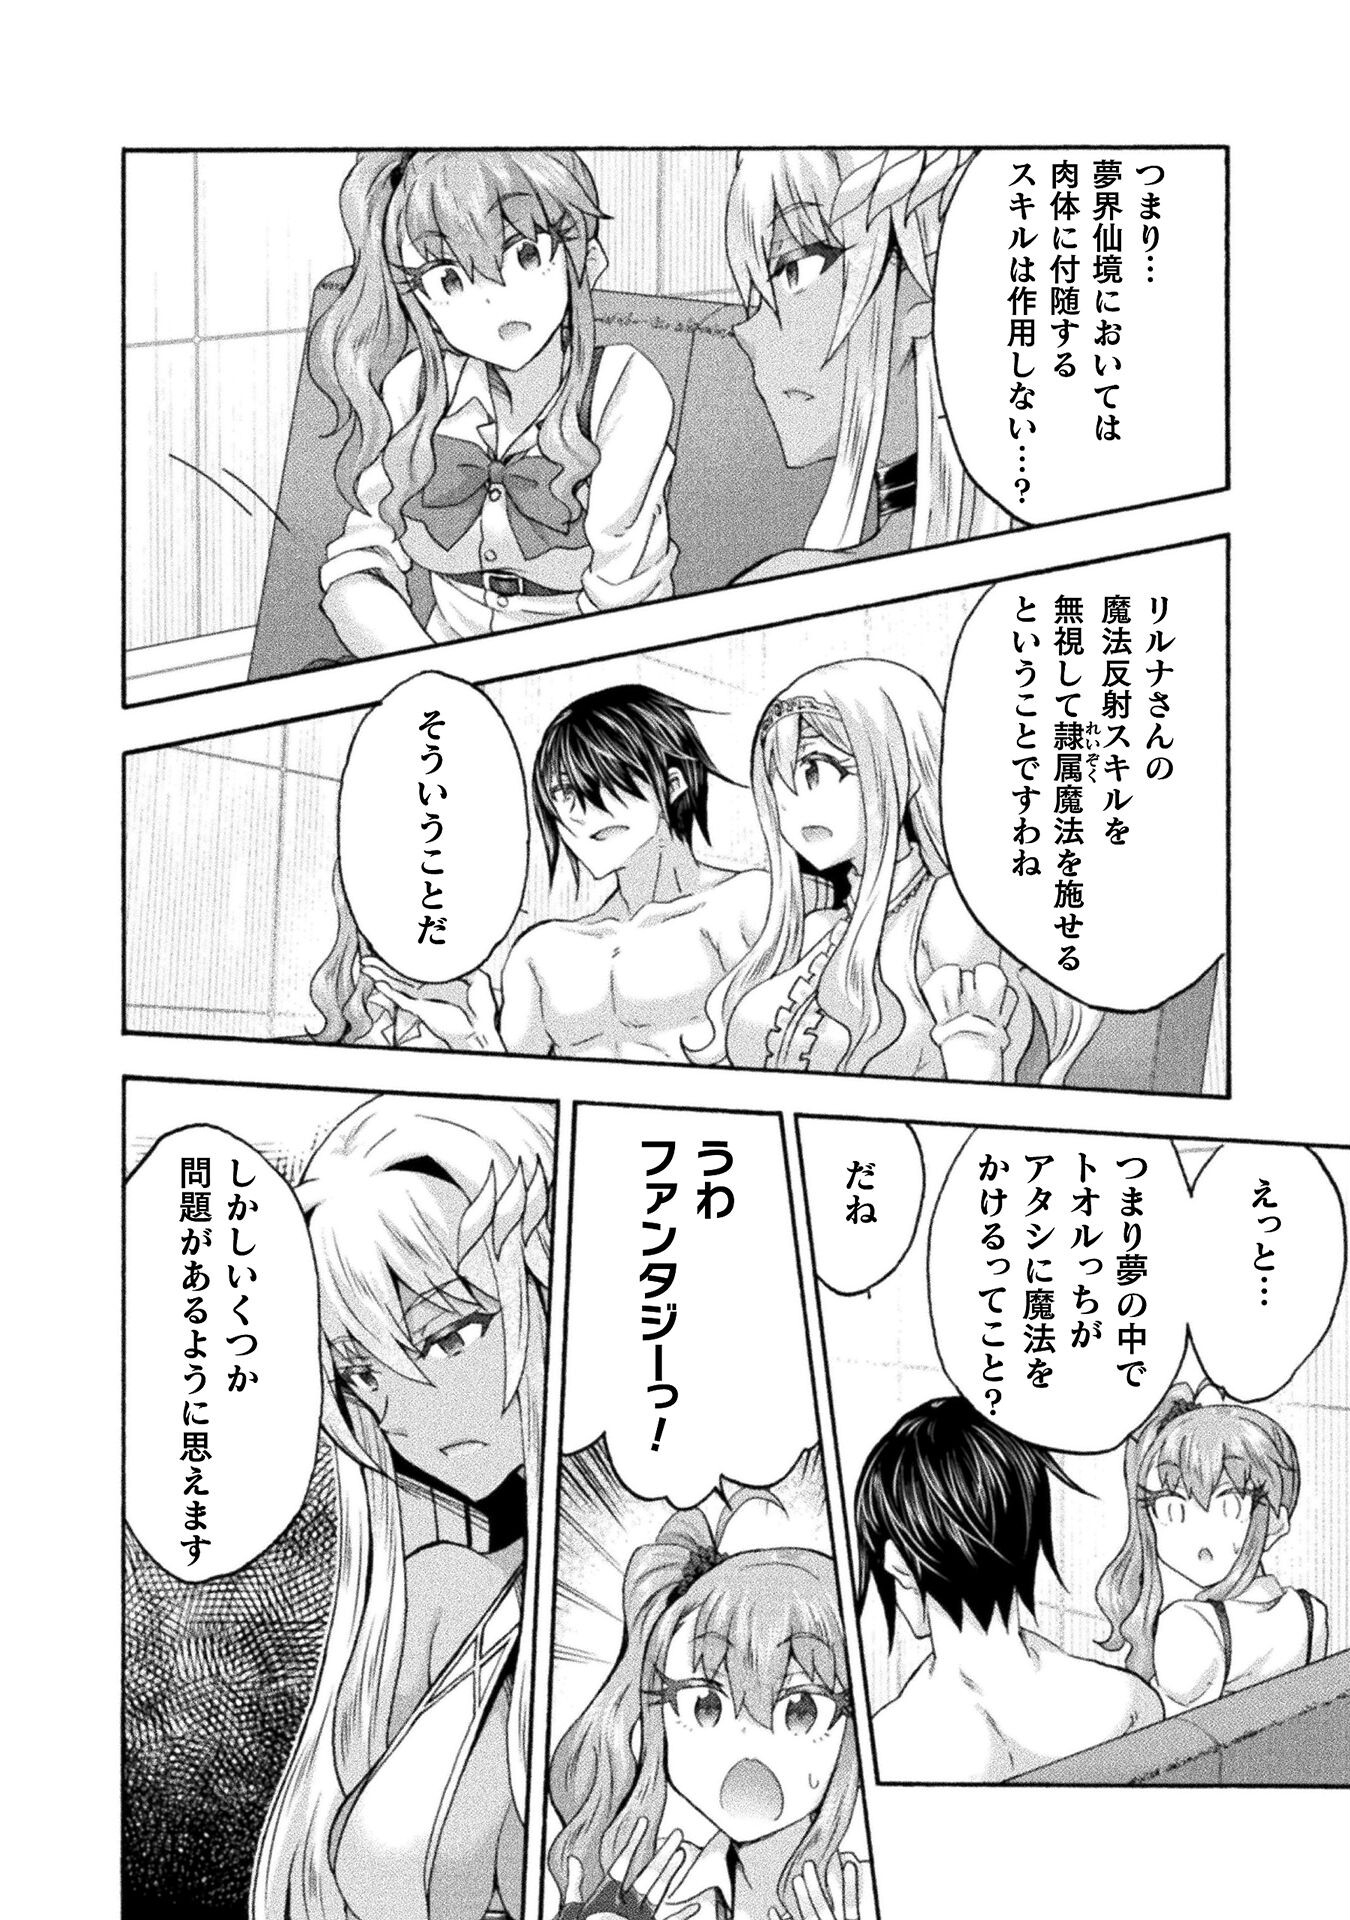 Himekishi ga Classmate! - Chapter 62 - Page 2